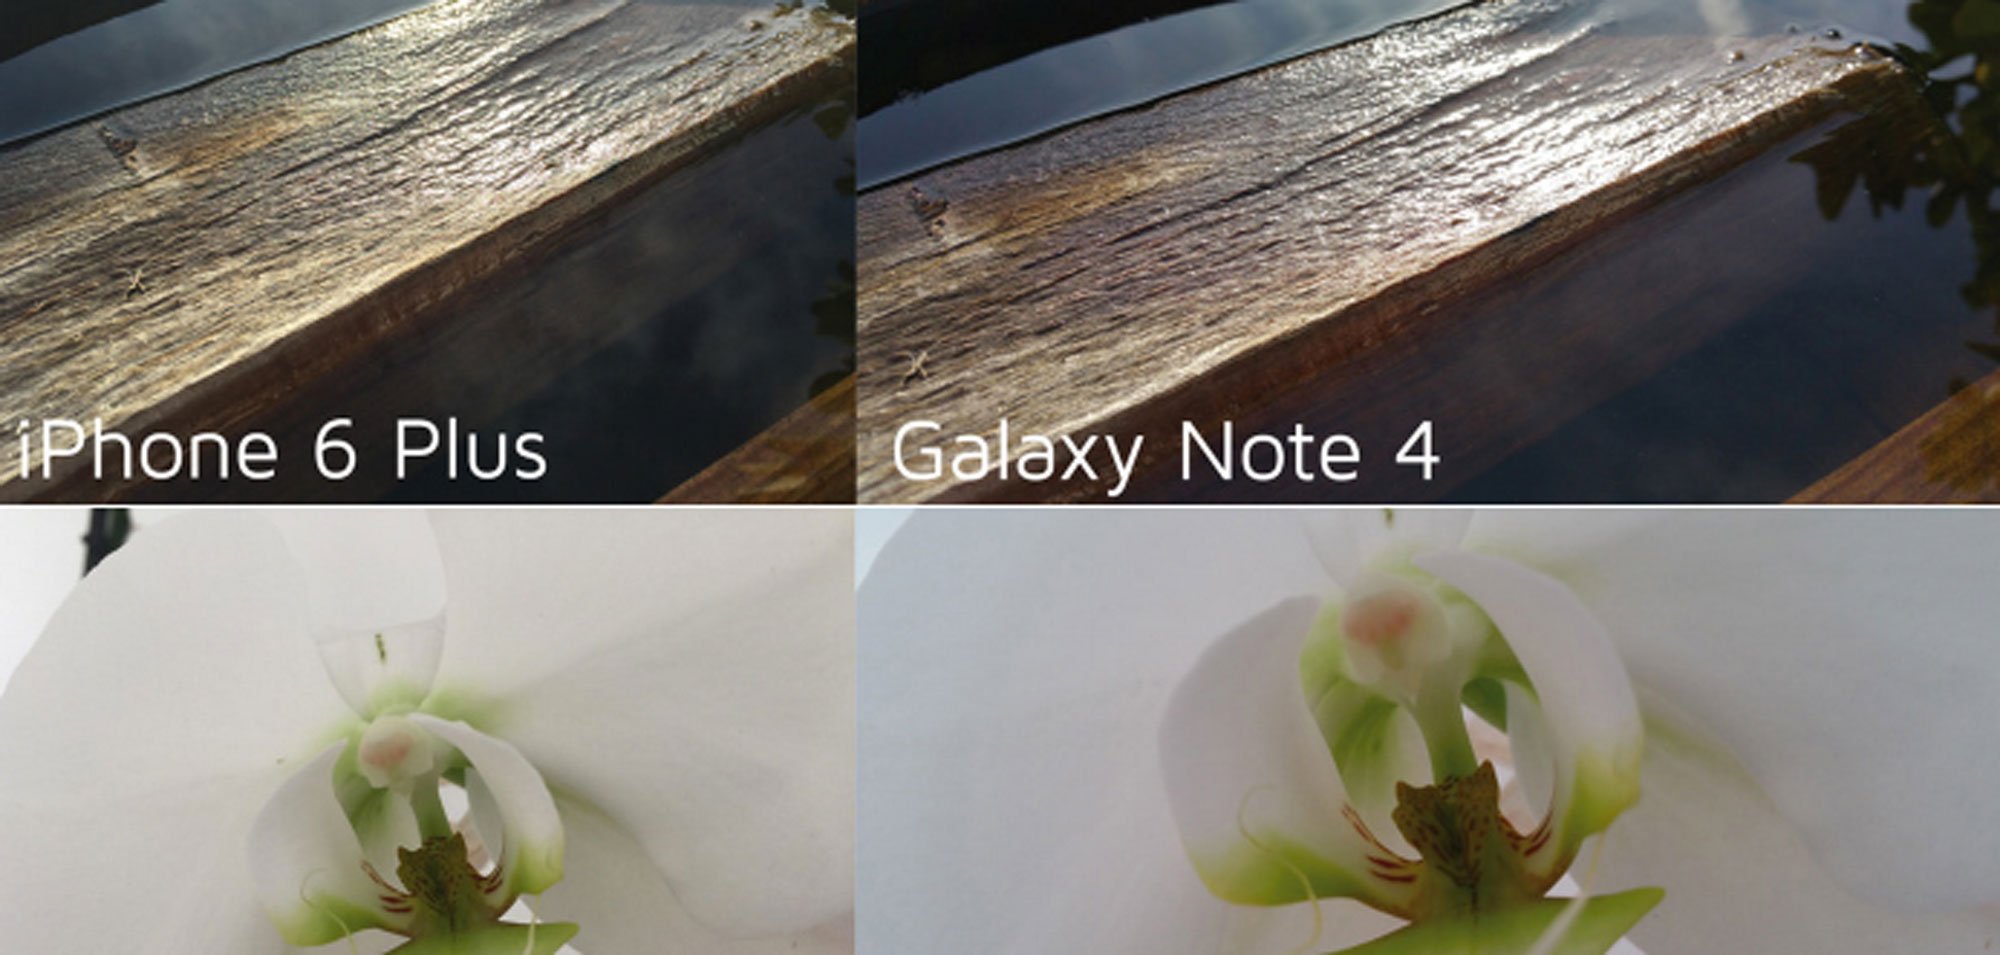 Kamera-Vergleich: iPhone 6 Plus vs. Samsung Galaxy Note 4 6